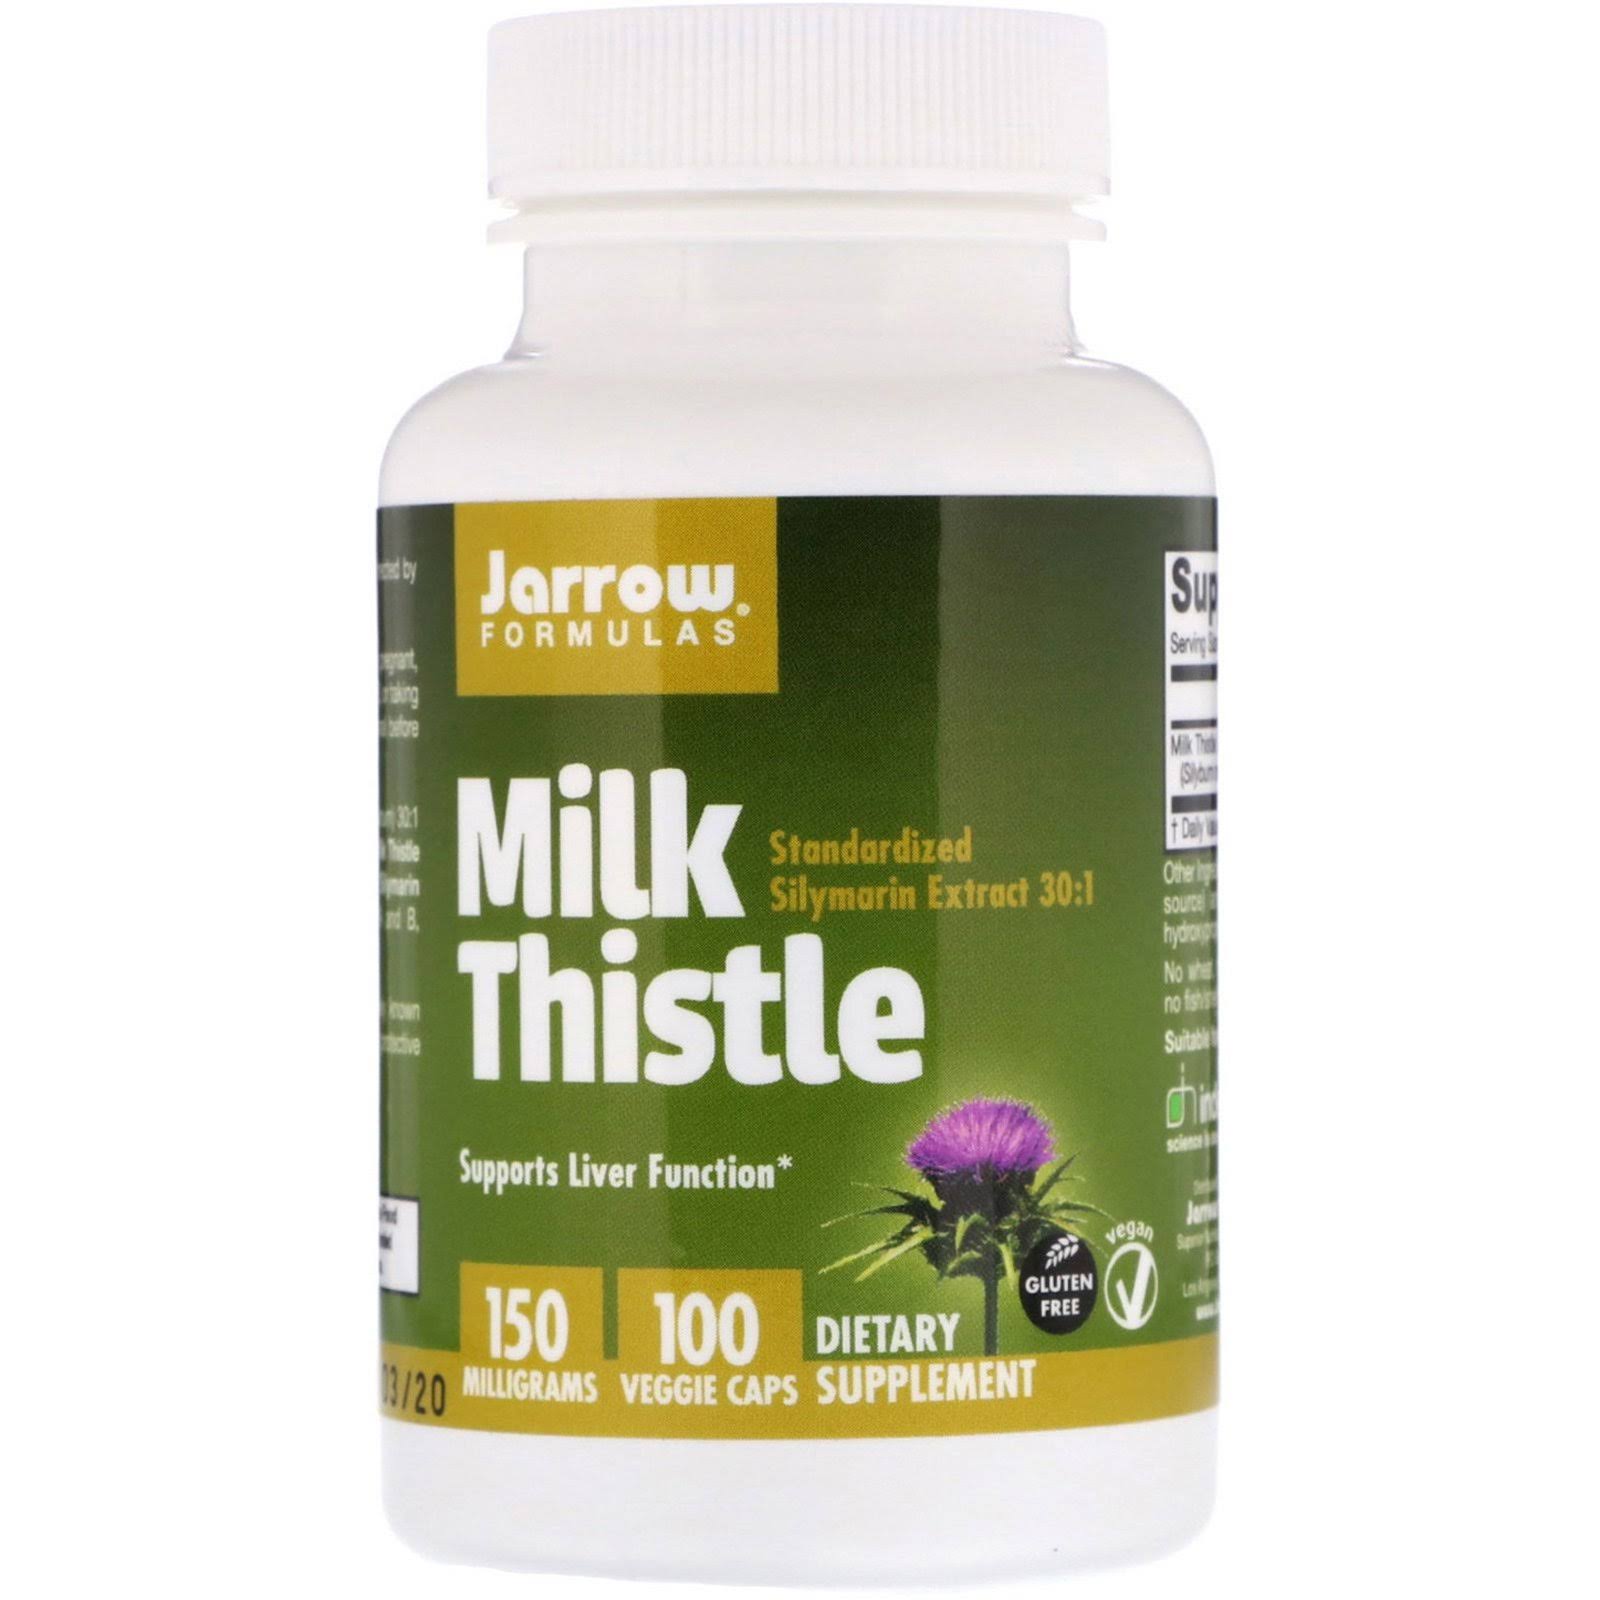 Jarrow Formulas Milk Thistle - 150mg, 100 Veggie Caps